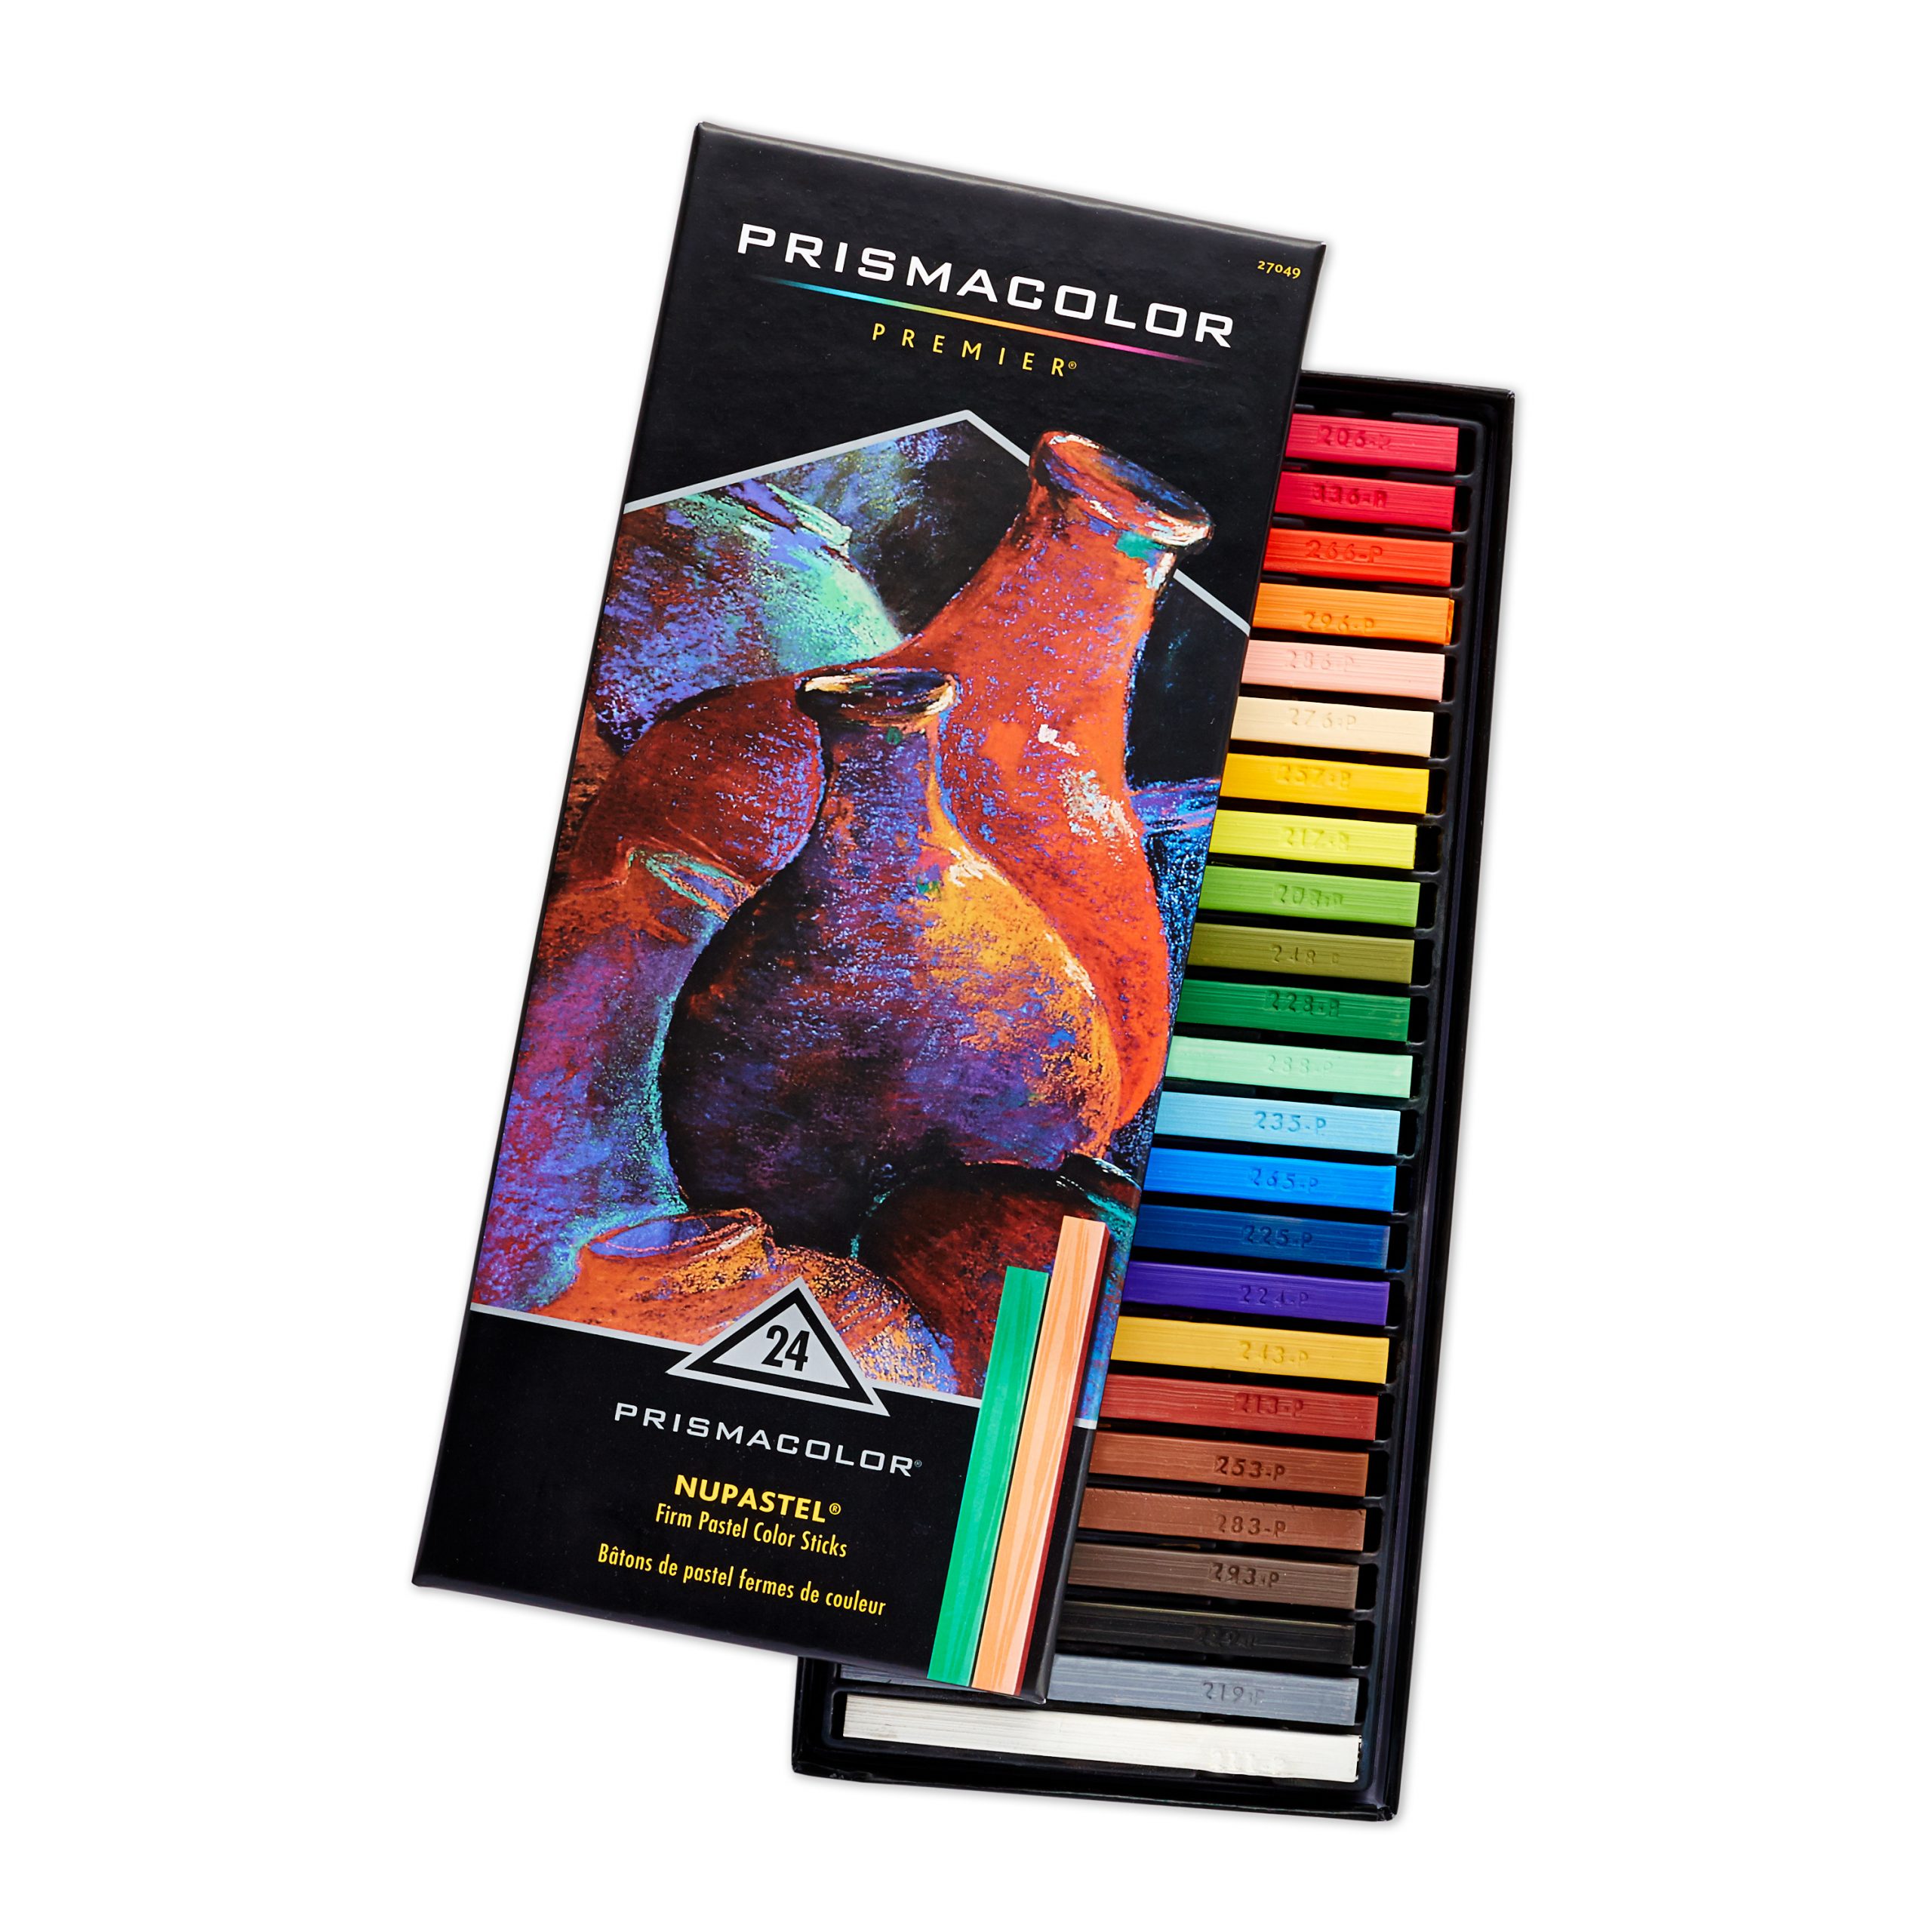 27049-prismacolor-pastels-premiernupastels-package-alt